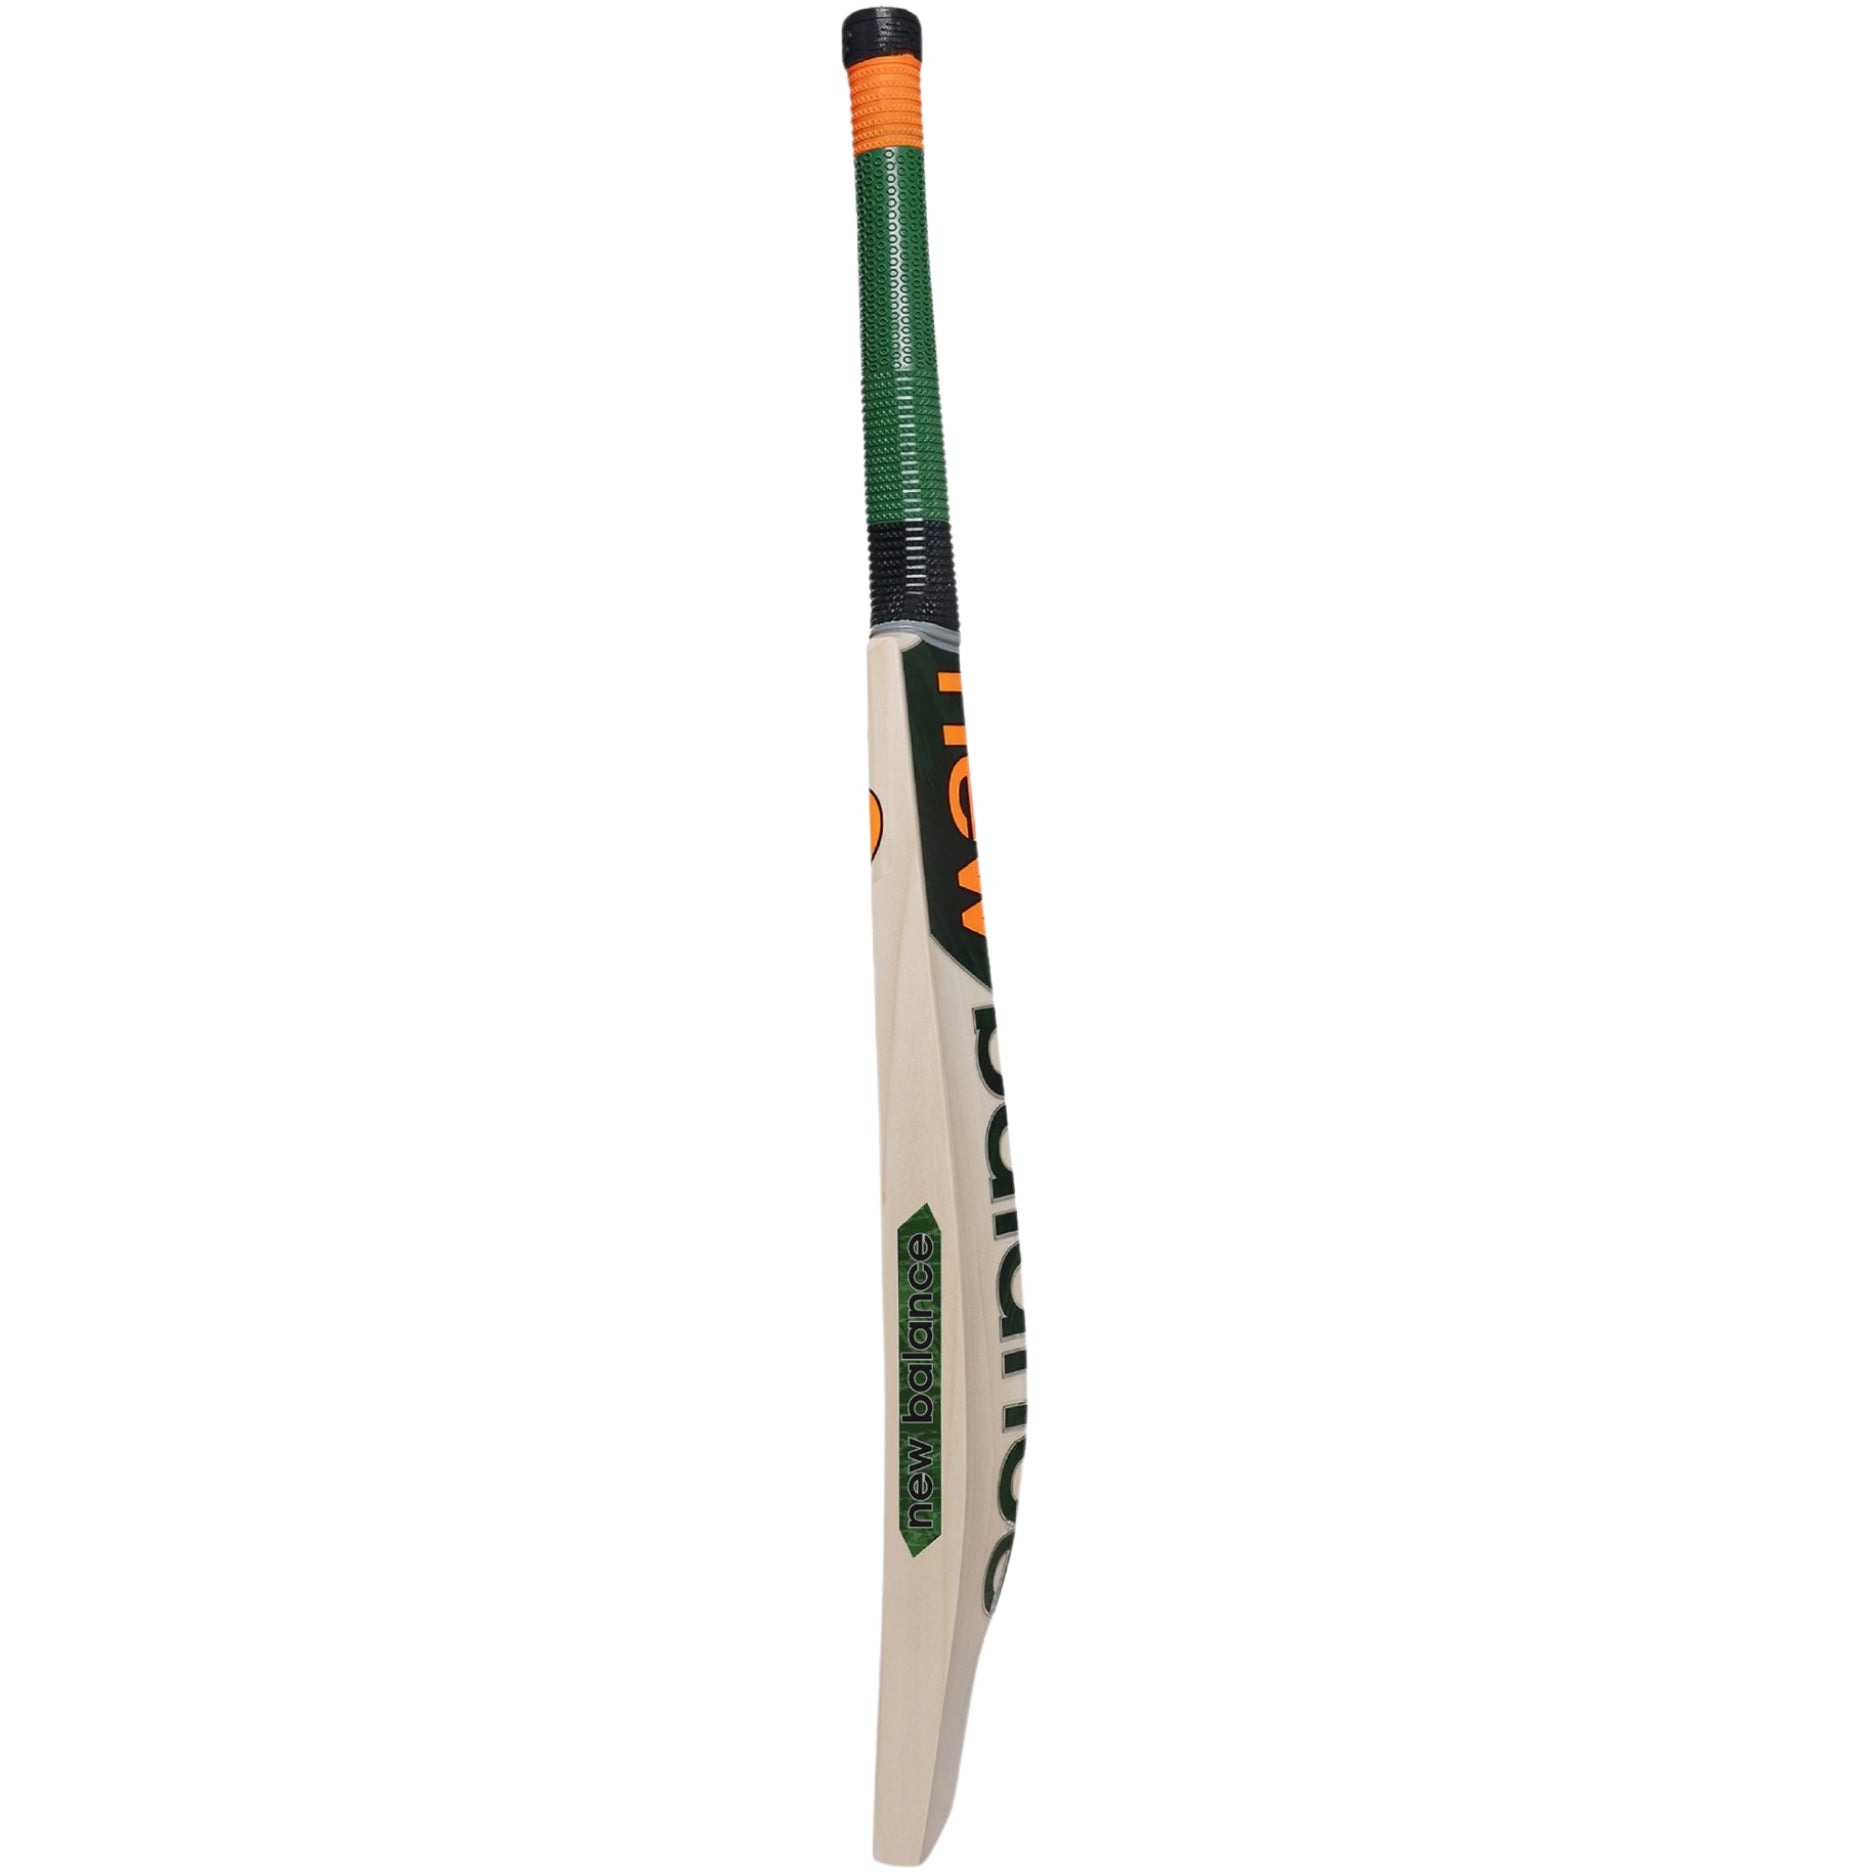 New Balance Cricket Bat, Model DC 840, English-Willow, SH